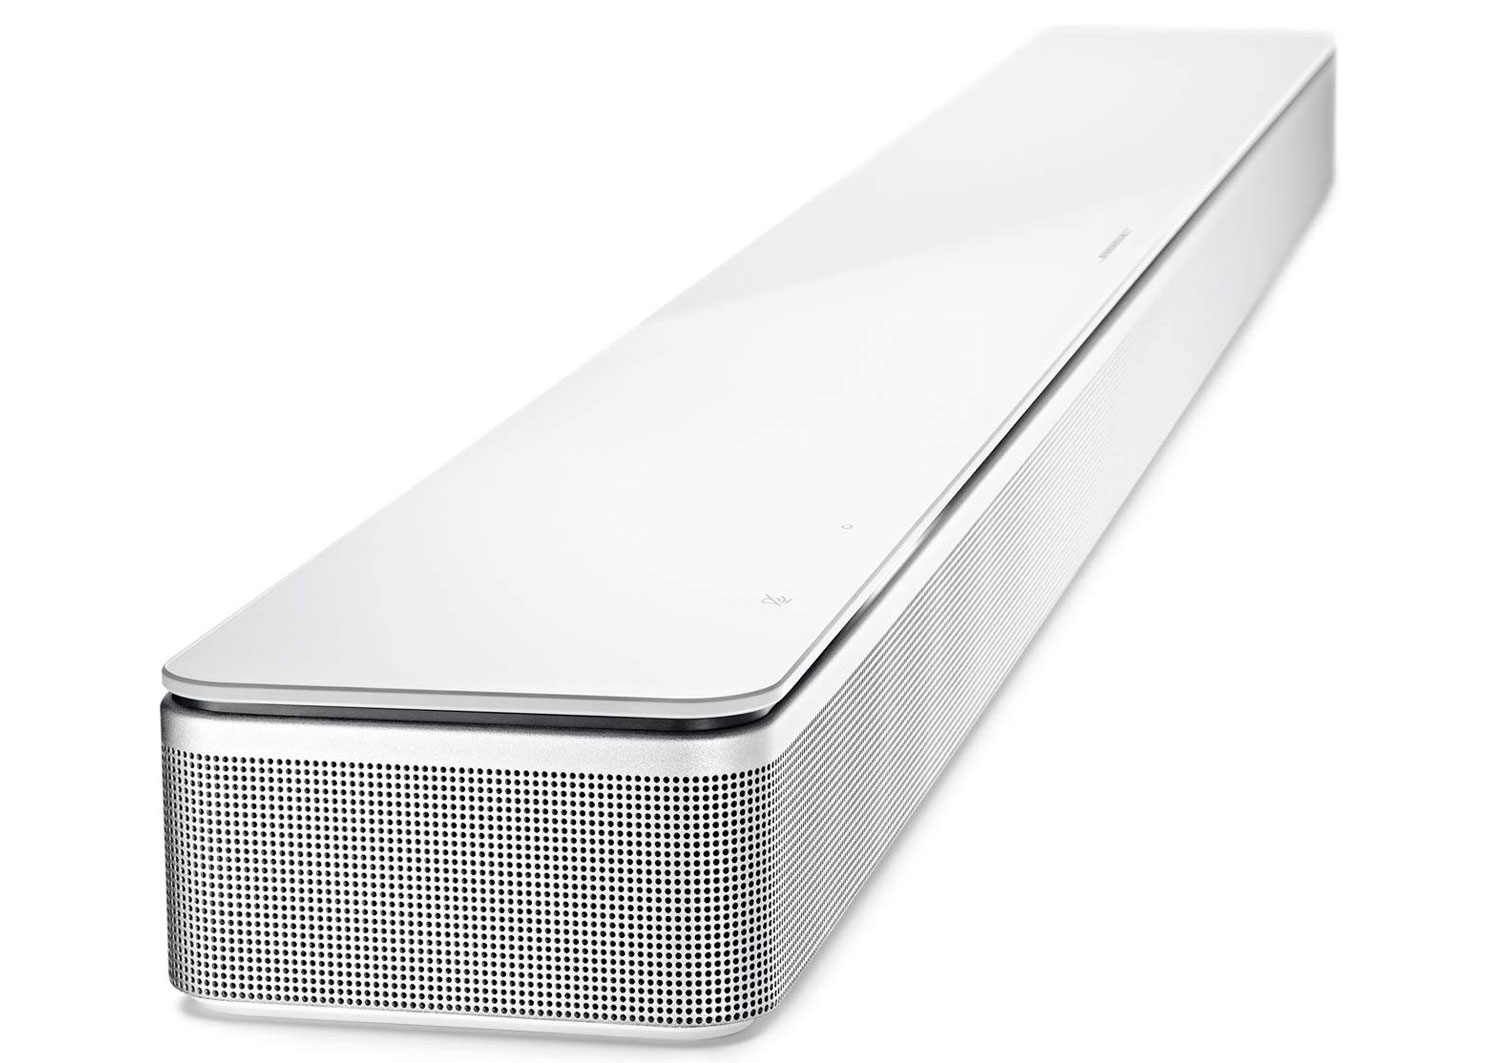 Soundbar-700 (White)
(เฉพาะลำโพง)
